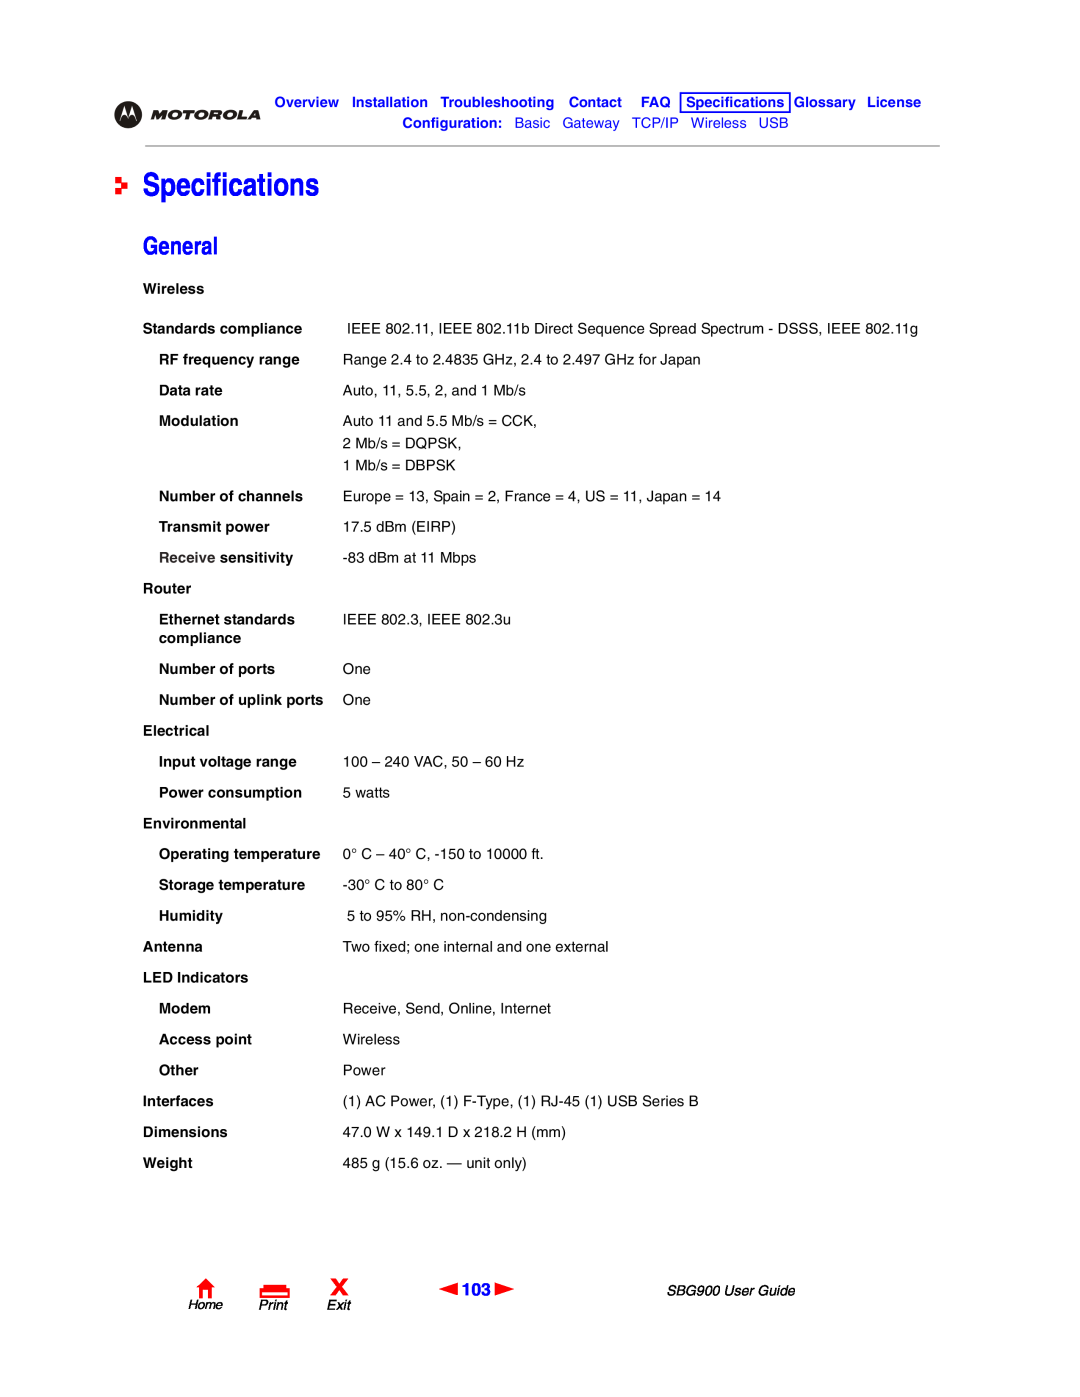 Motorola SBG900 manual Specifications, General, Home Print Exit 